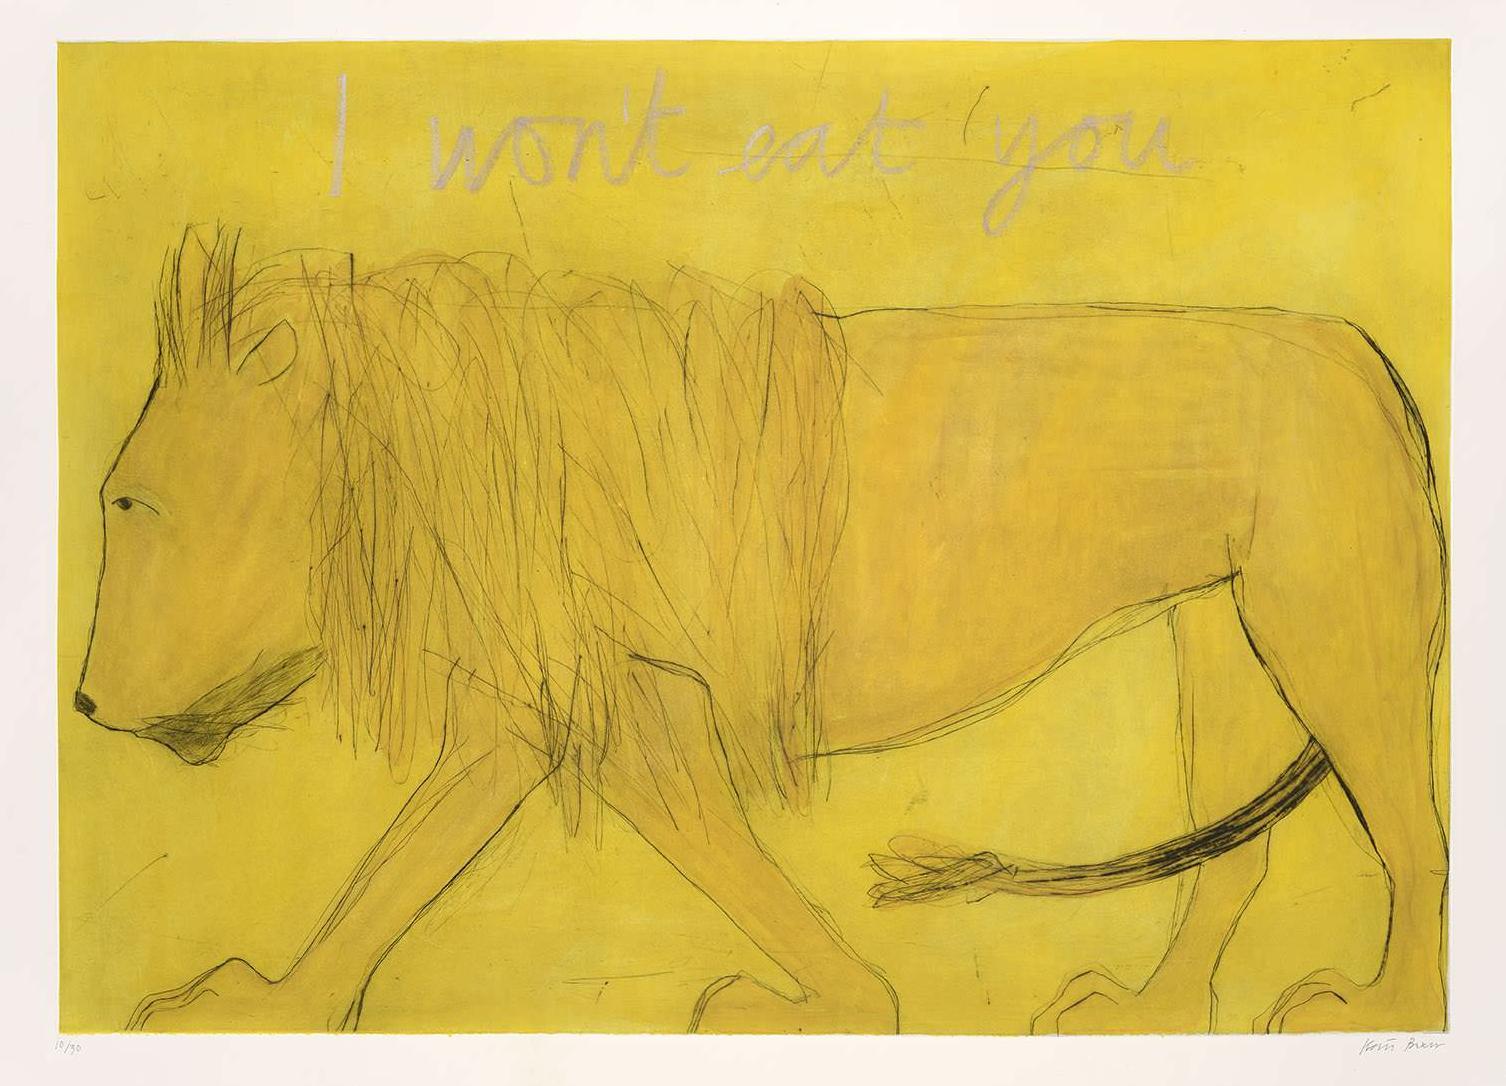 Kate Boxer  Landscape Print - I Won't Eat You, Limited edition print, Animal print, Lion, Yellow, Illustrative